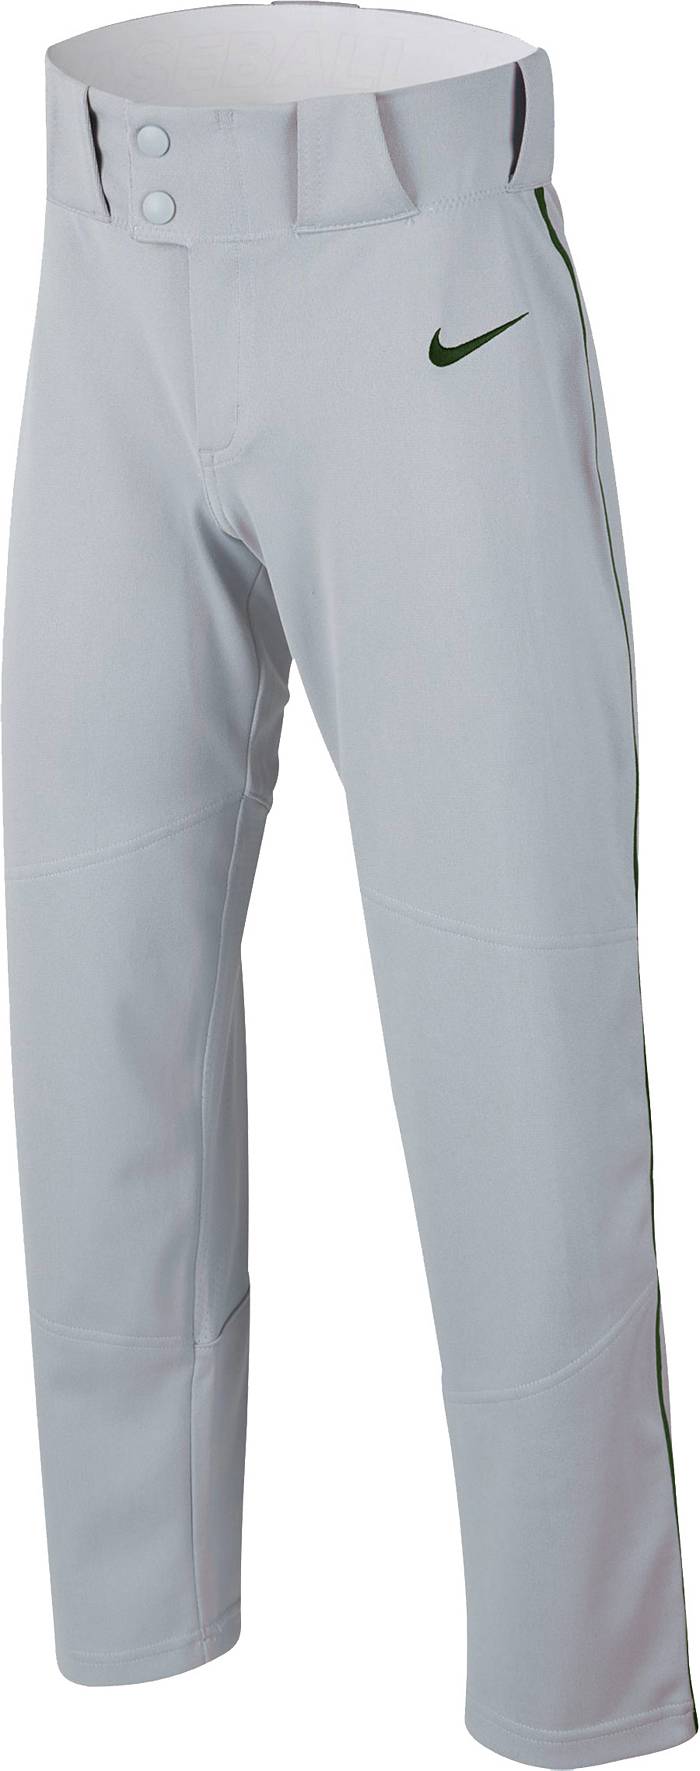 Boys Nike Stock Vapor Select Piped Pant L / TM White/Tm Dark Green/Tm Dark Green